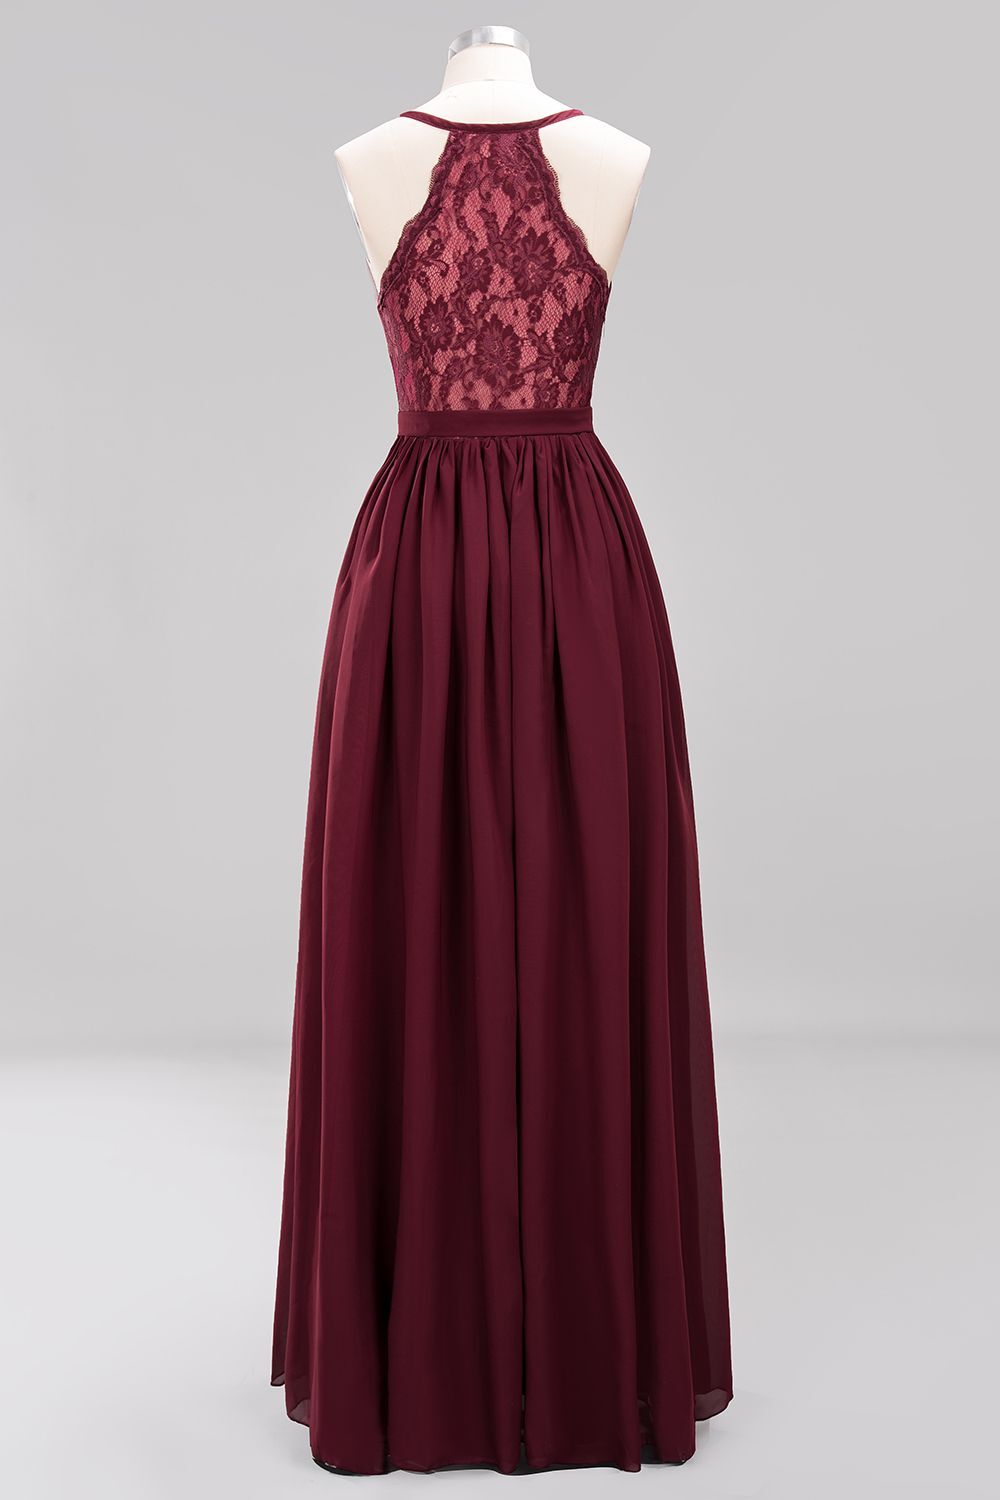 Elegant Wine Red Chiffon A-line Long Bridesmaid Dress